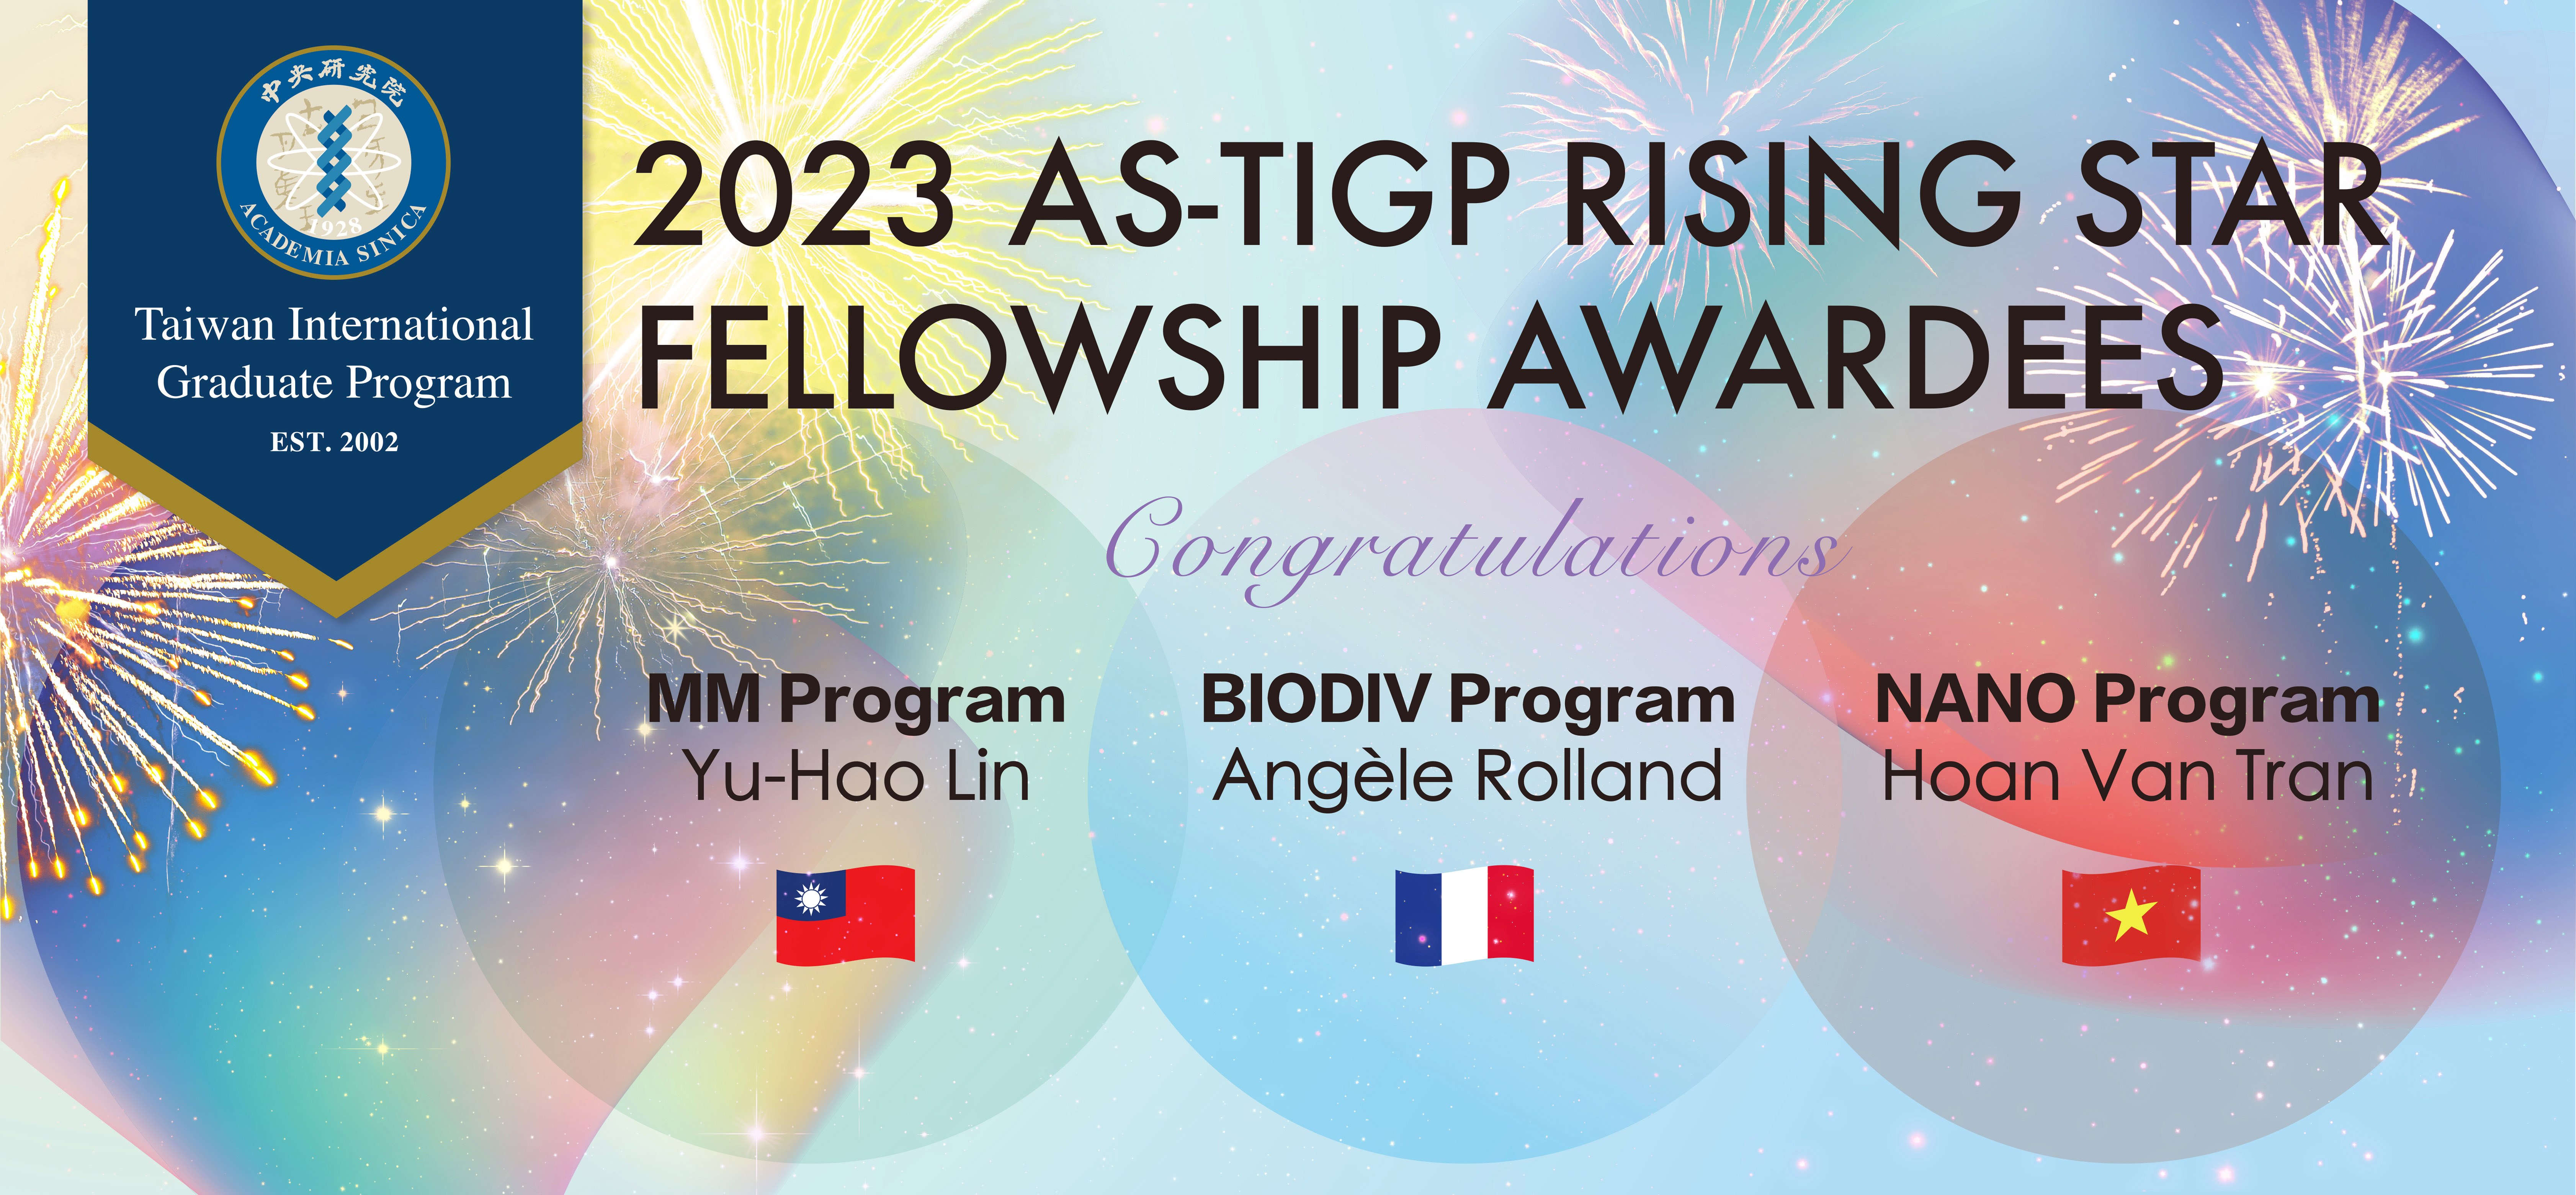 The Awardee of the Rising Star Fellowship 2023